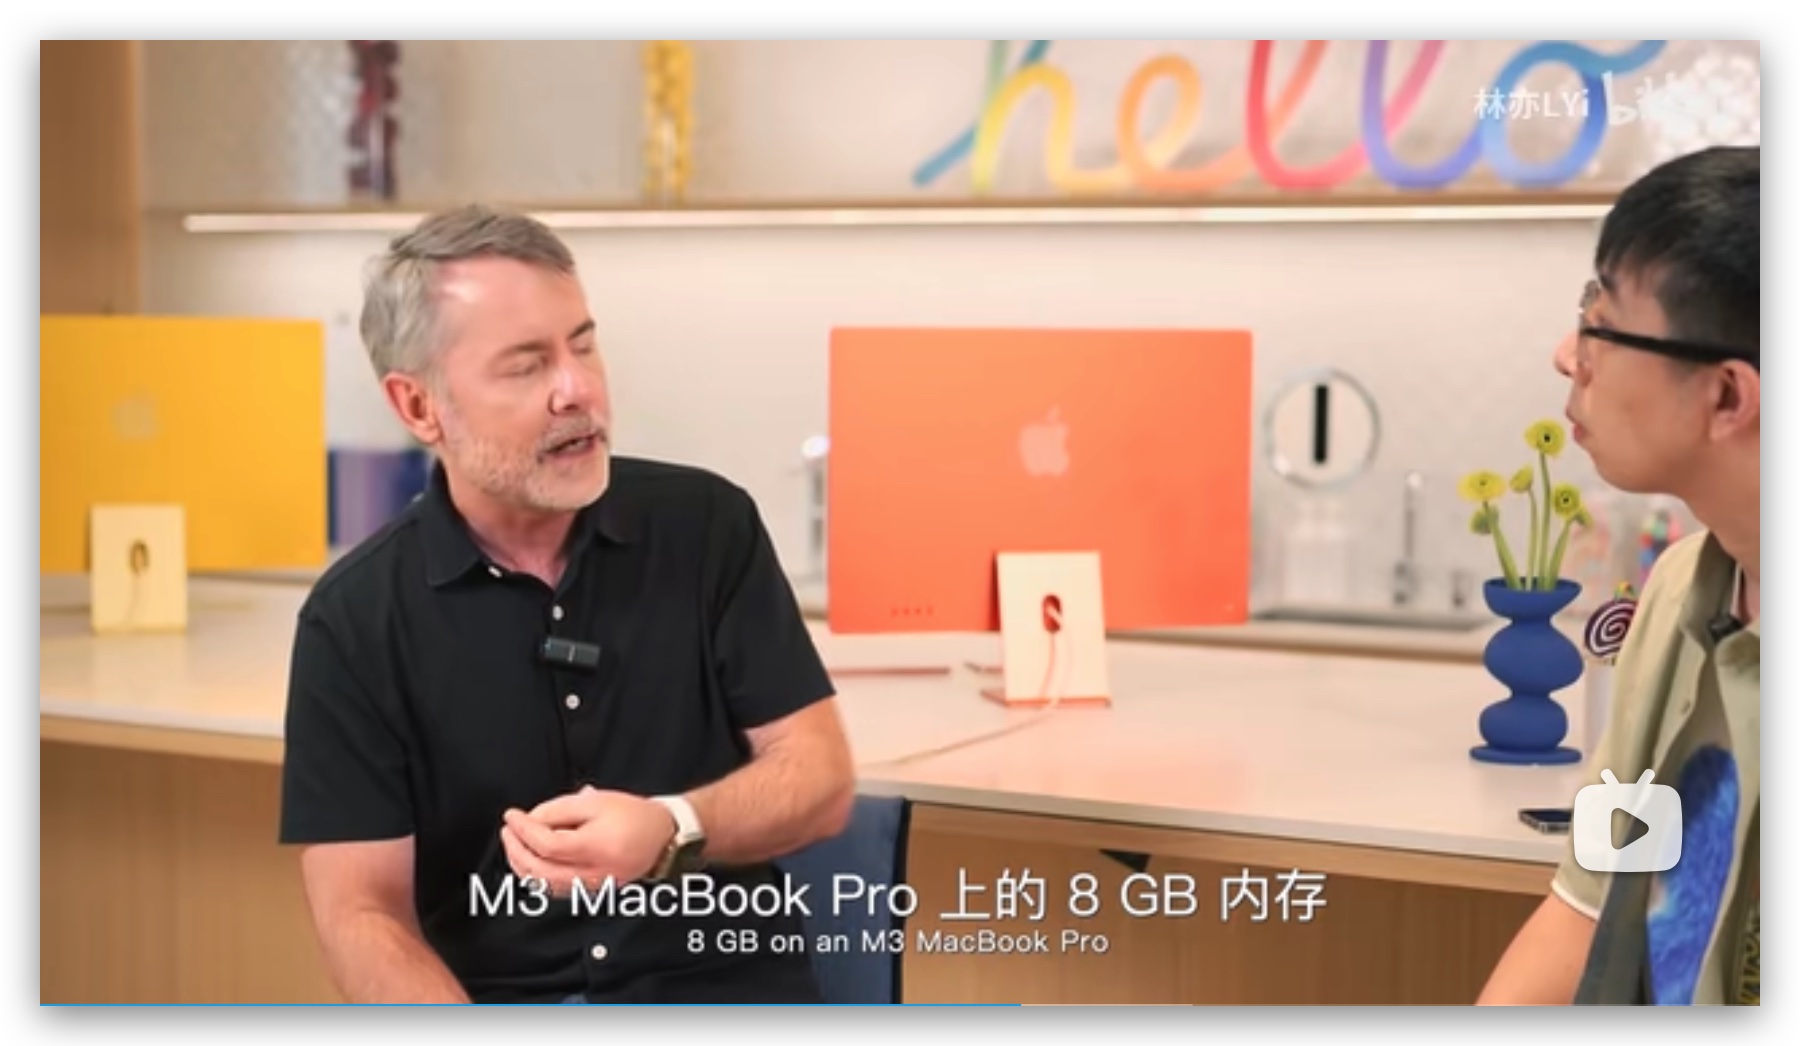 MacBook Pro 8GB メモリー は他の 16GB 相当